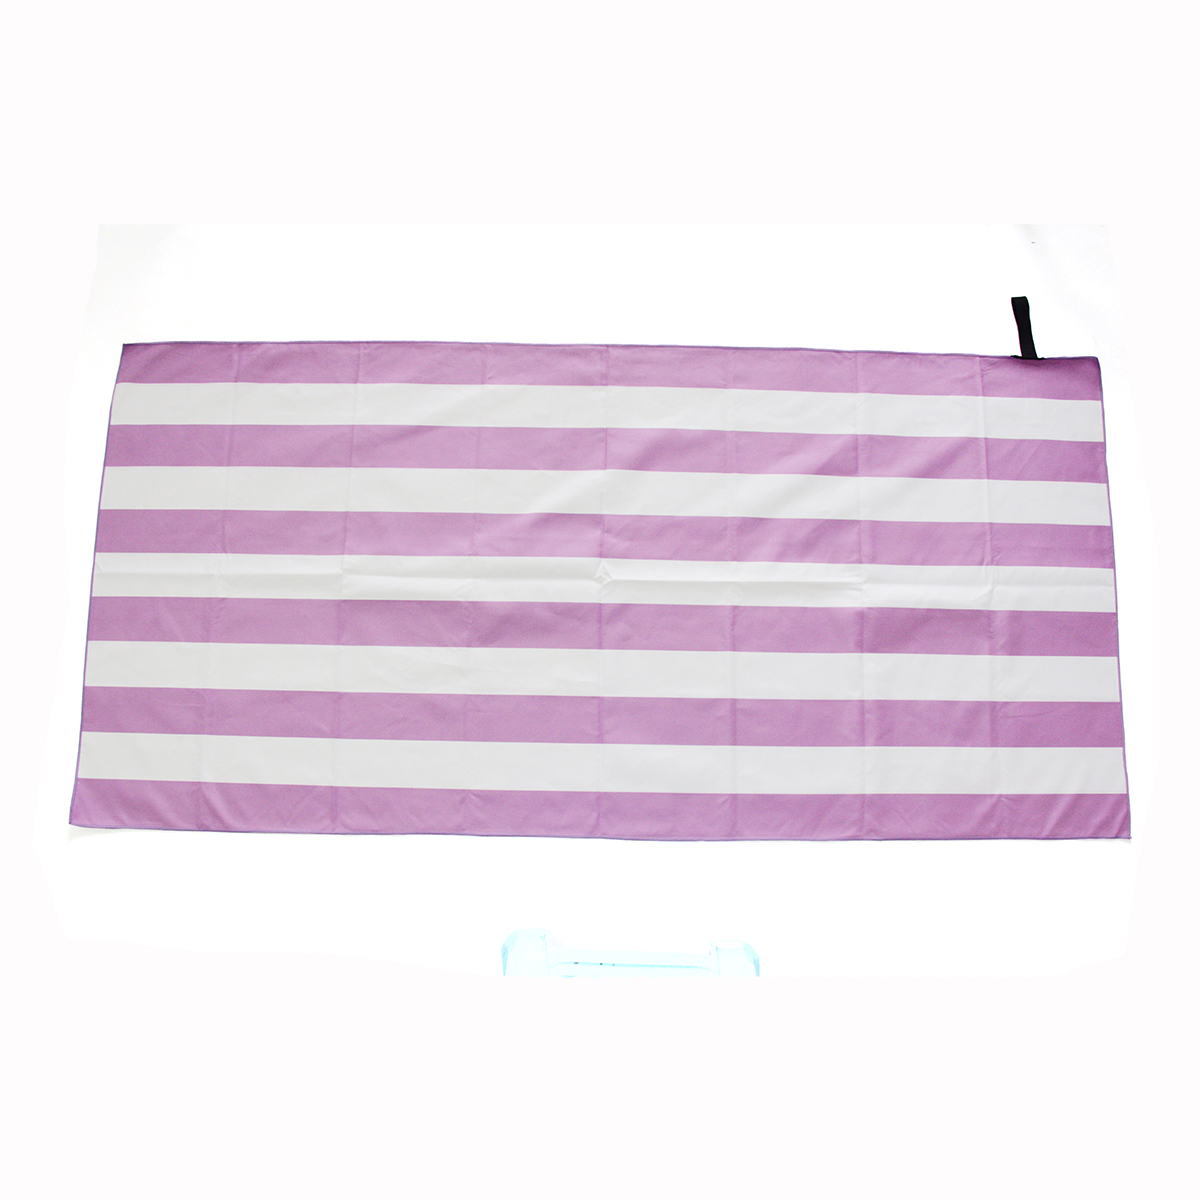 Wholesale Cheap Price Mircofiber Material Beach Towel Fashion Travel Towel